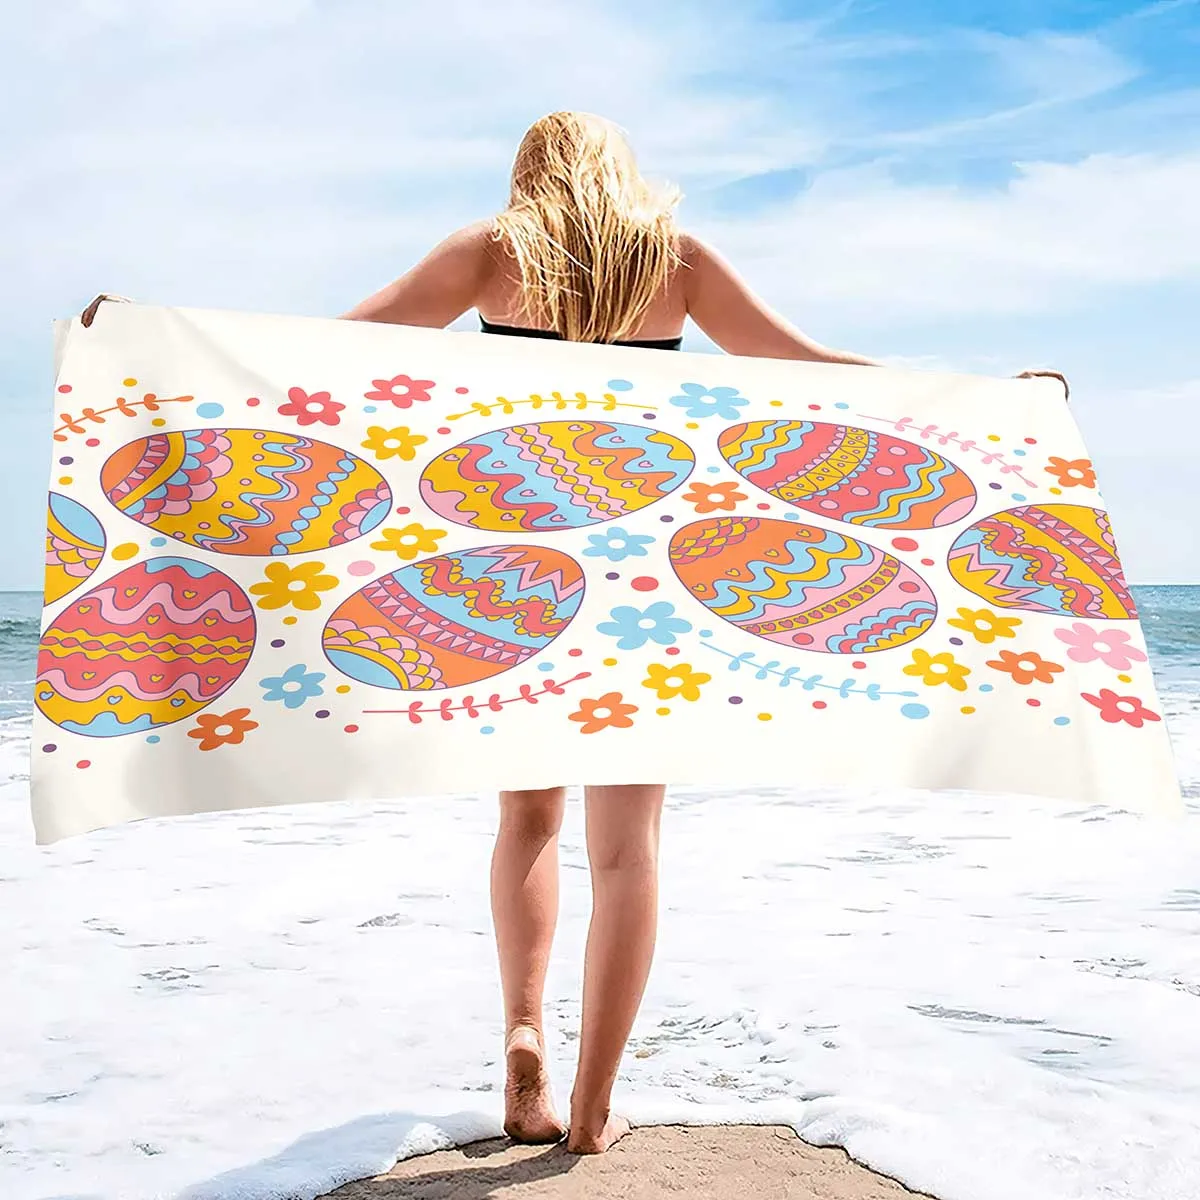 

Easter Eggs Microfiber Quick Dry Beach Towel,Large Soft Bath Towel,Super Absorbent Sand Proof Swim Blanket Travel Beach Towel